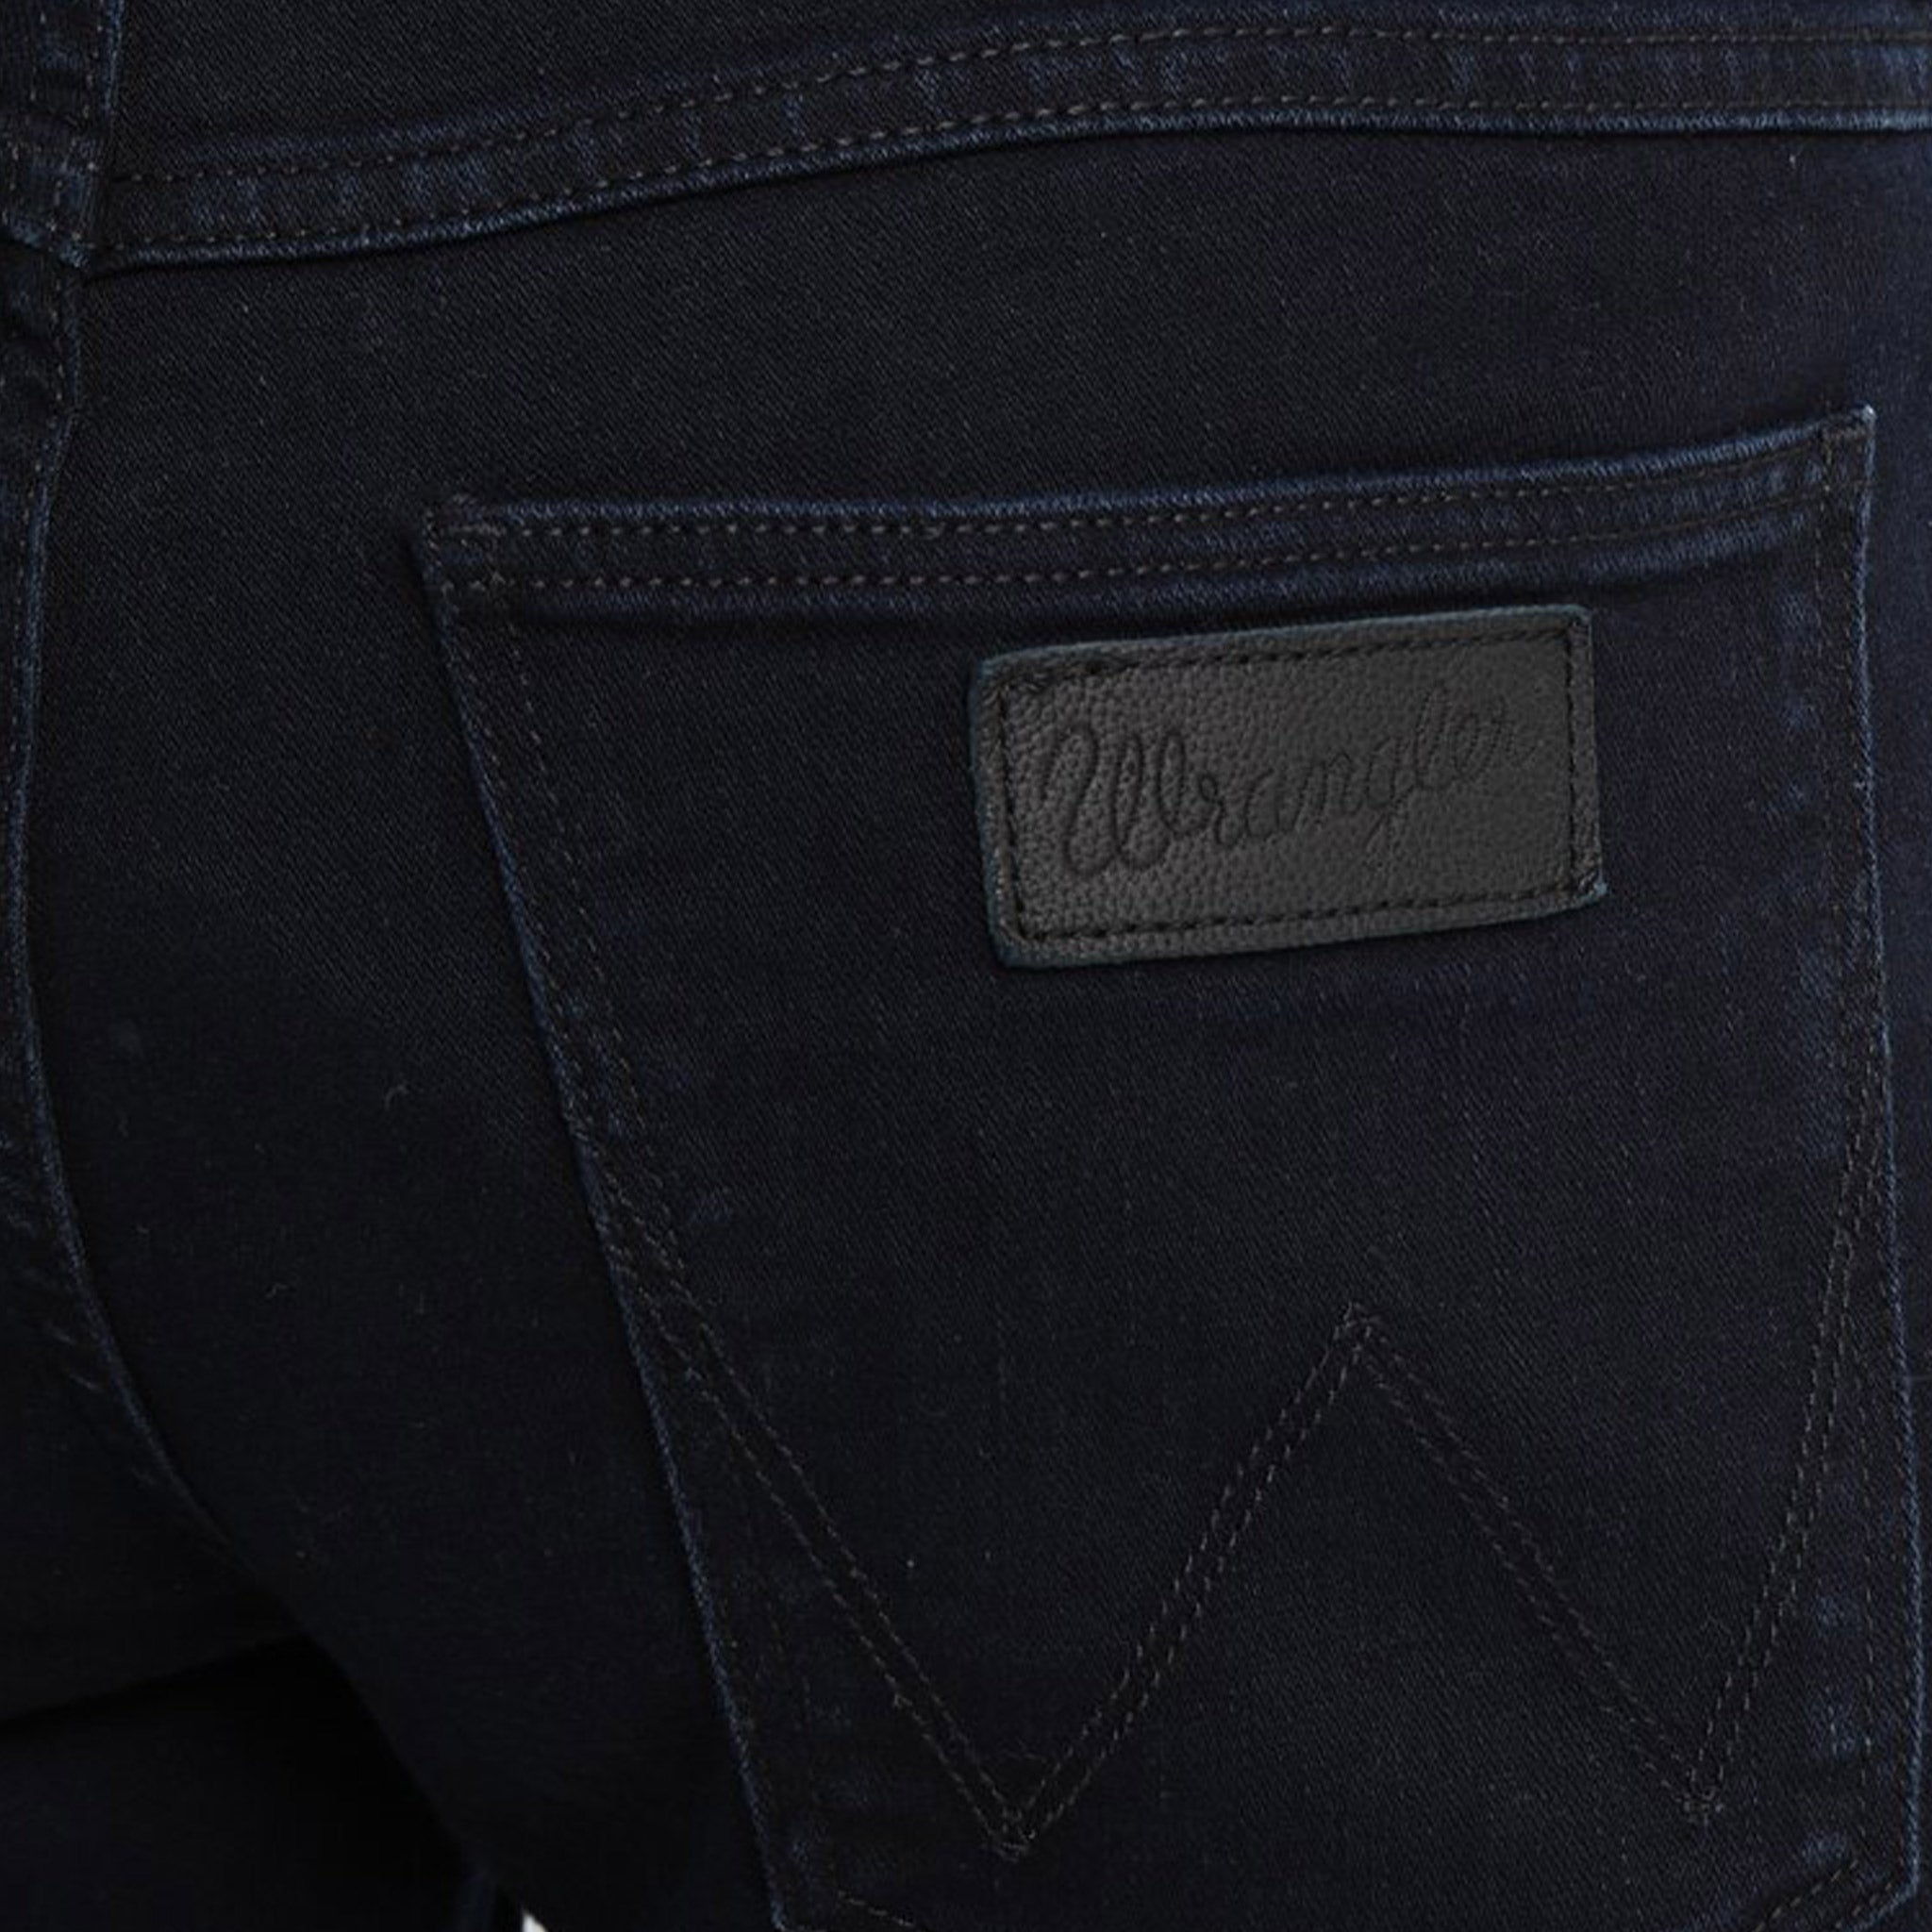 Wrangler Greensboro Stretch Jean in Black Back Close Up of Back Pocket